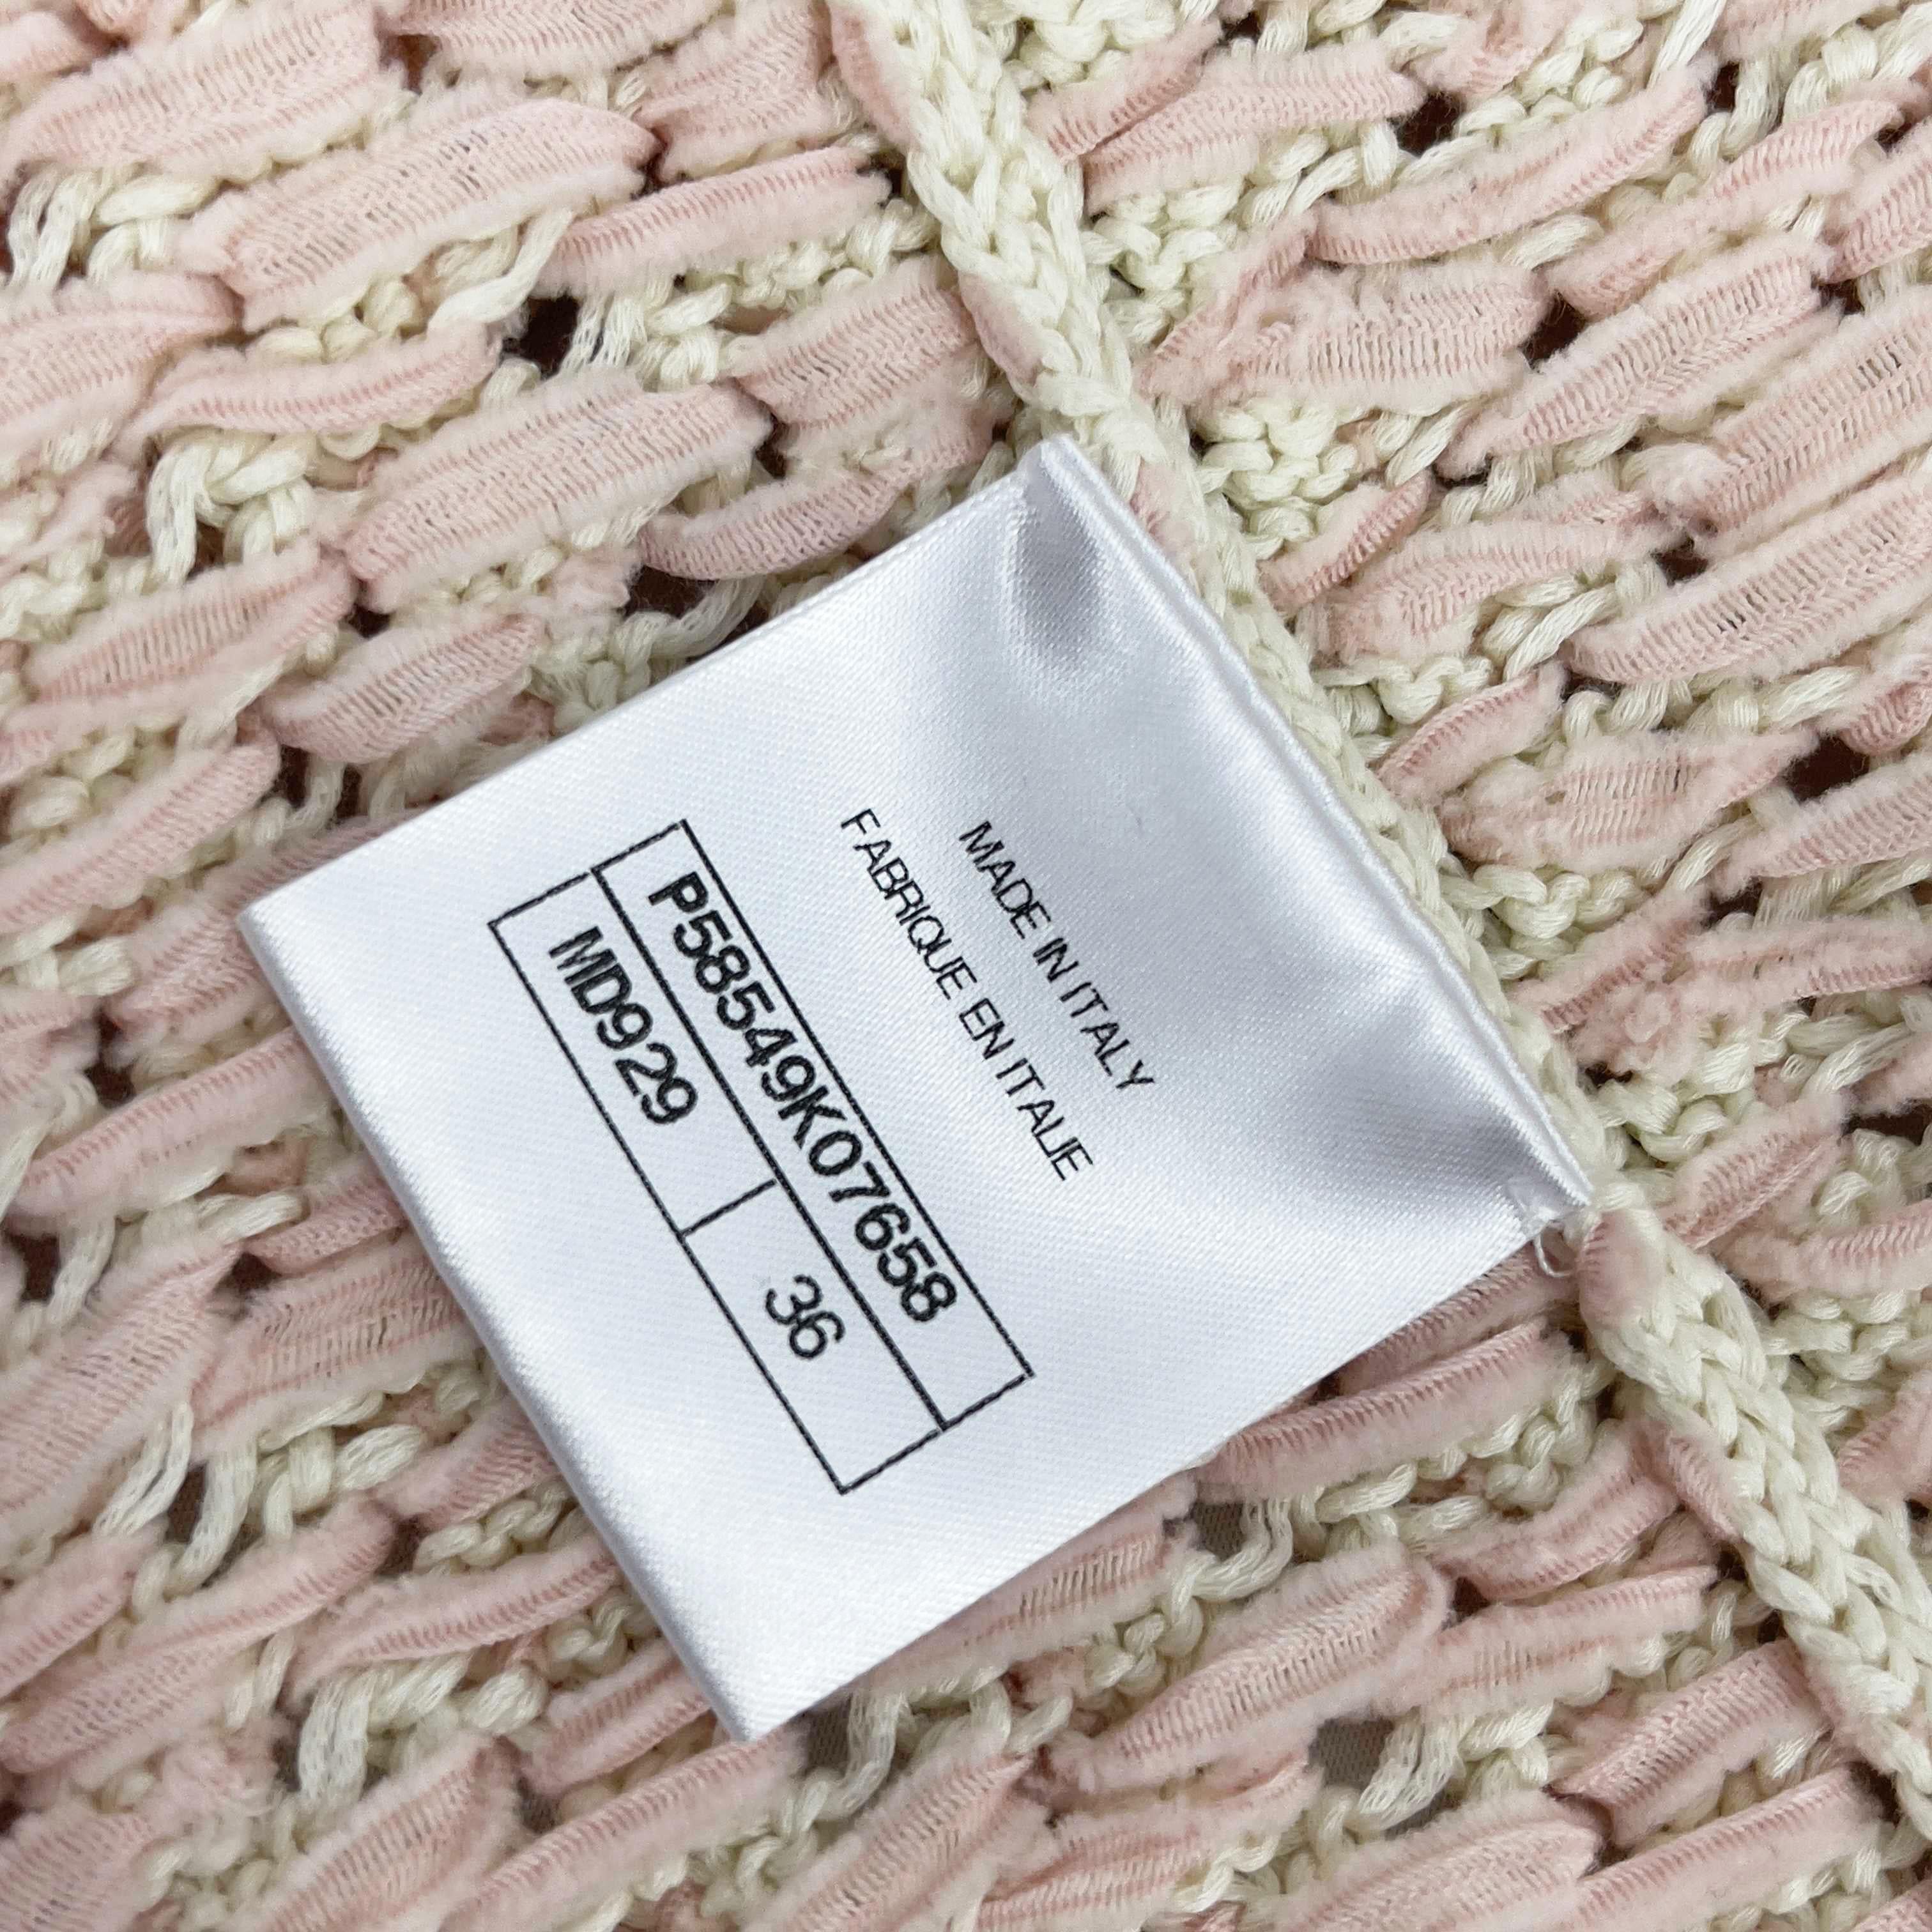 CHANEL -18P Cotton Blend Woven Knit Sweater Pastel Pink / Ecru 36 US 4 2